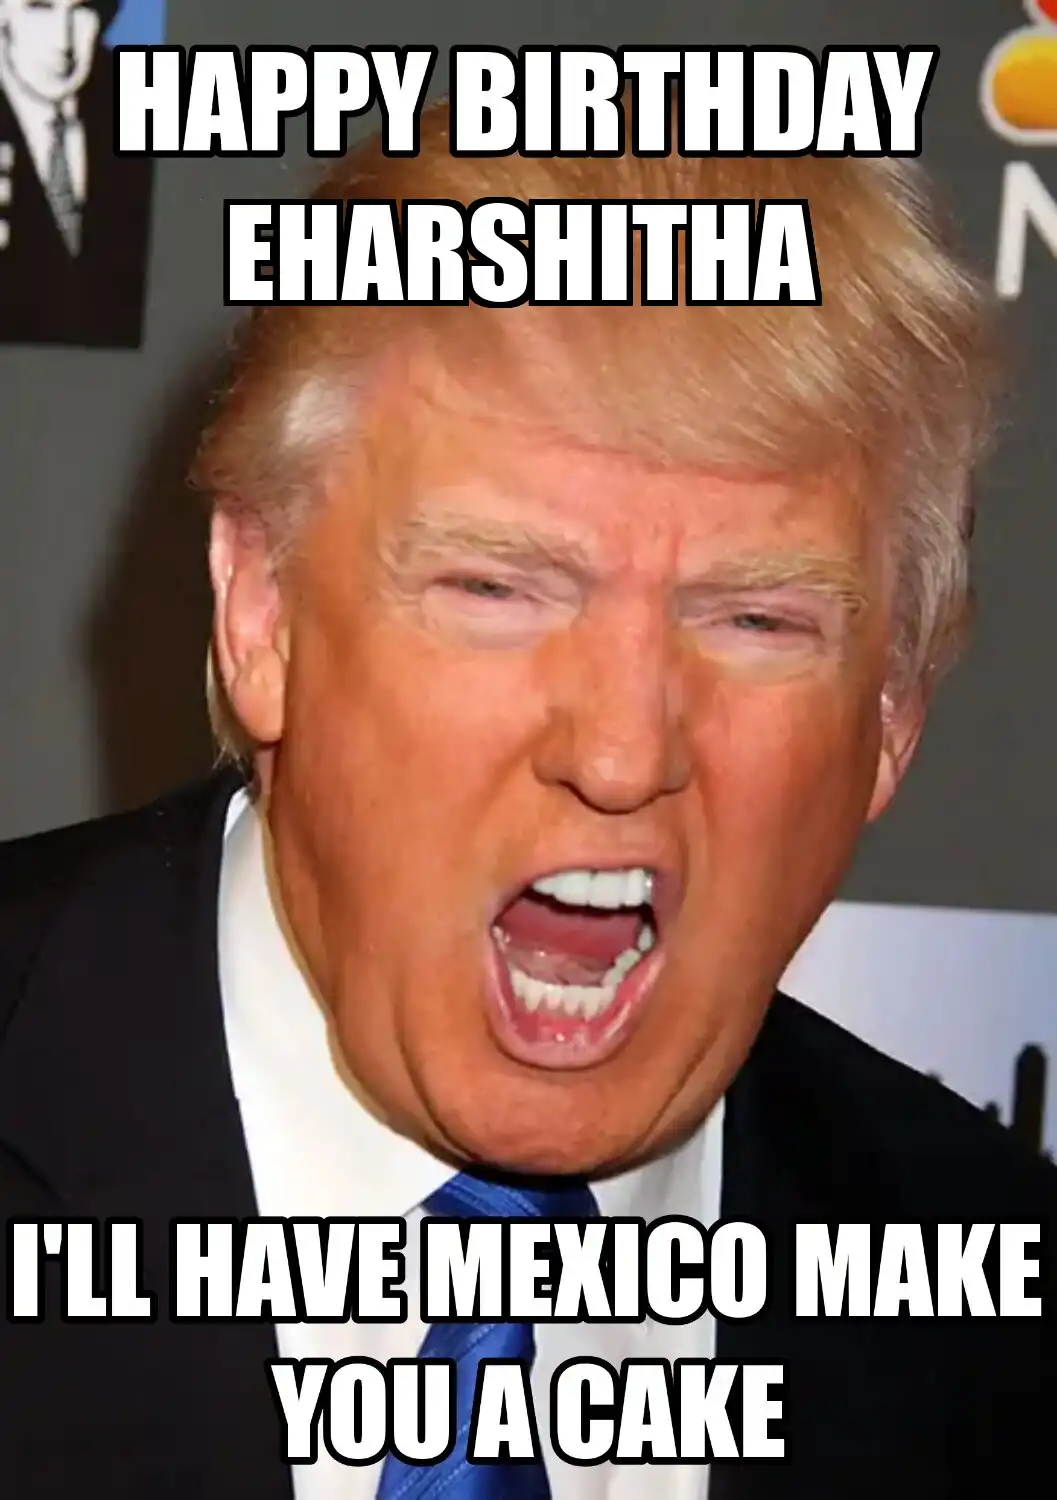 Happy Birthday Eharshitha Mexico Make You A Cake Meme